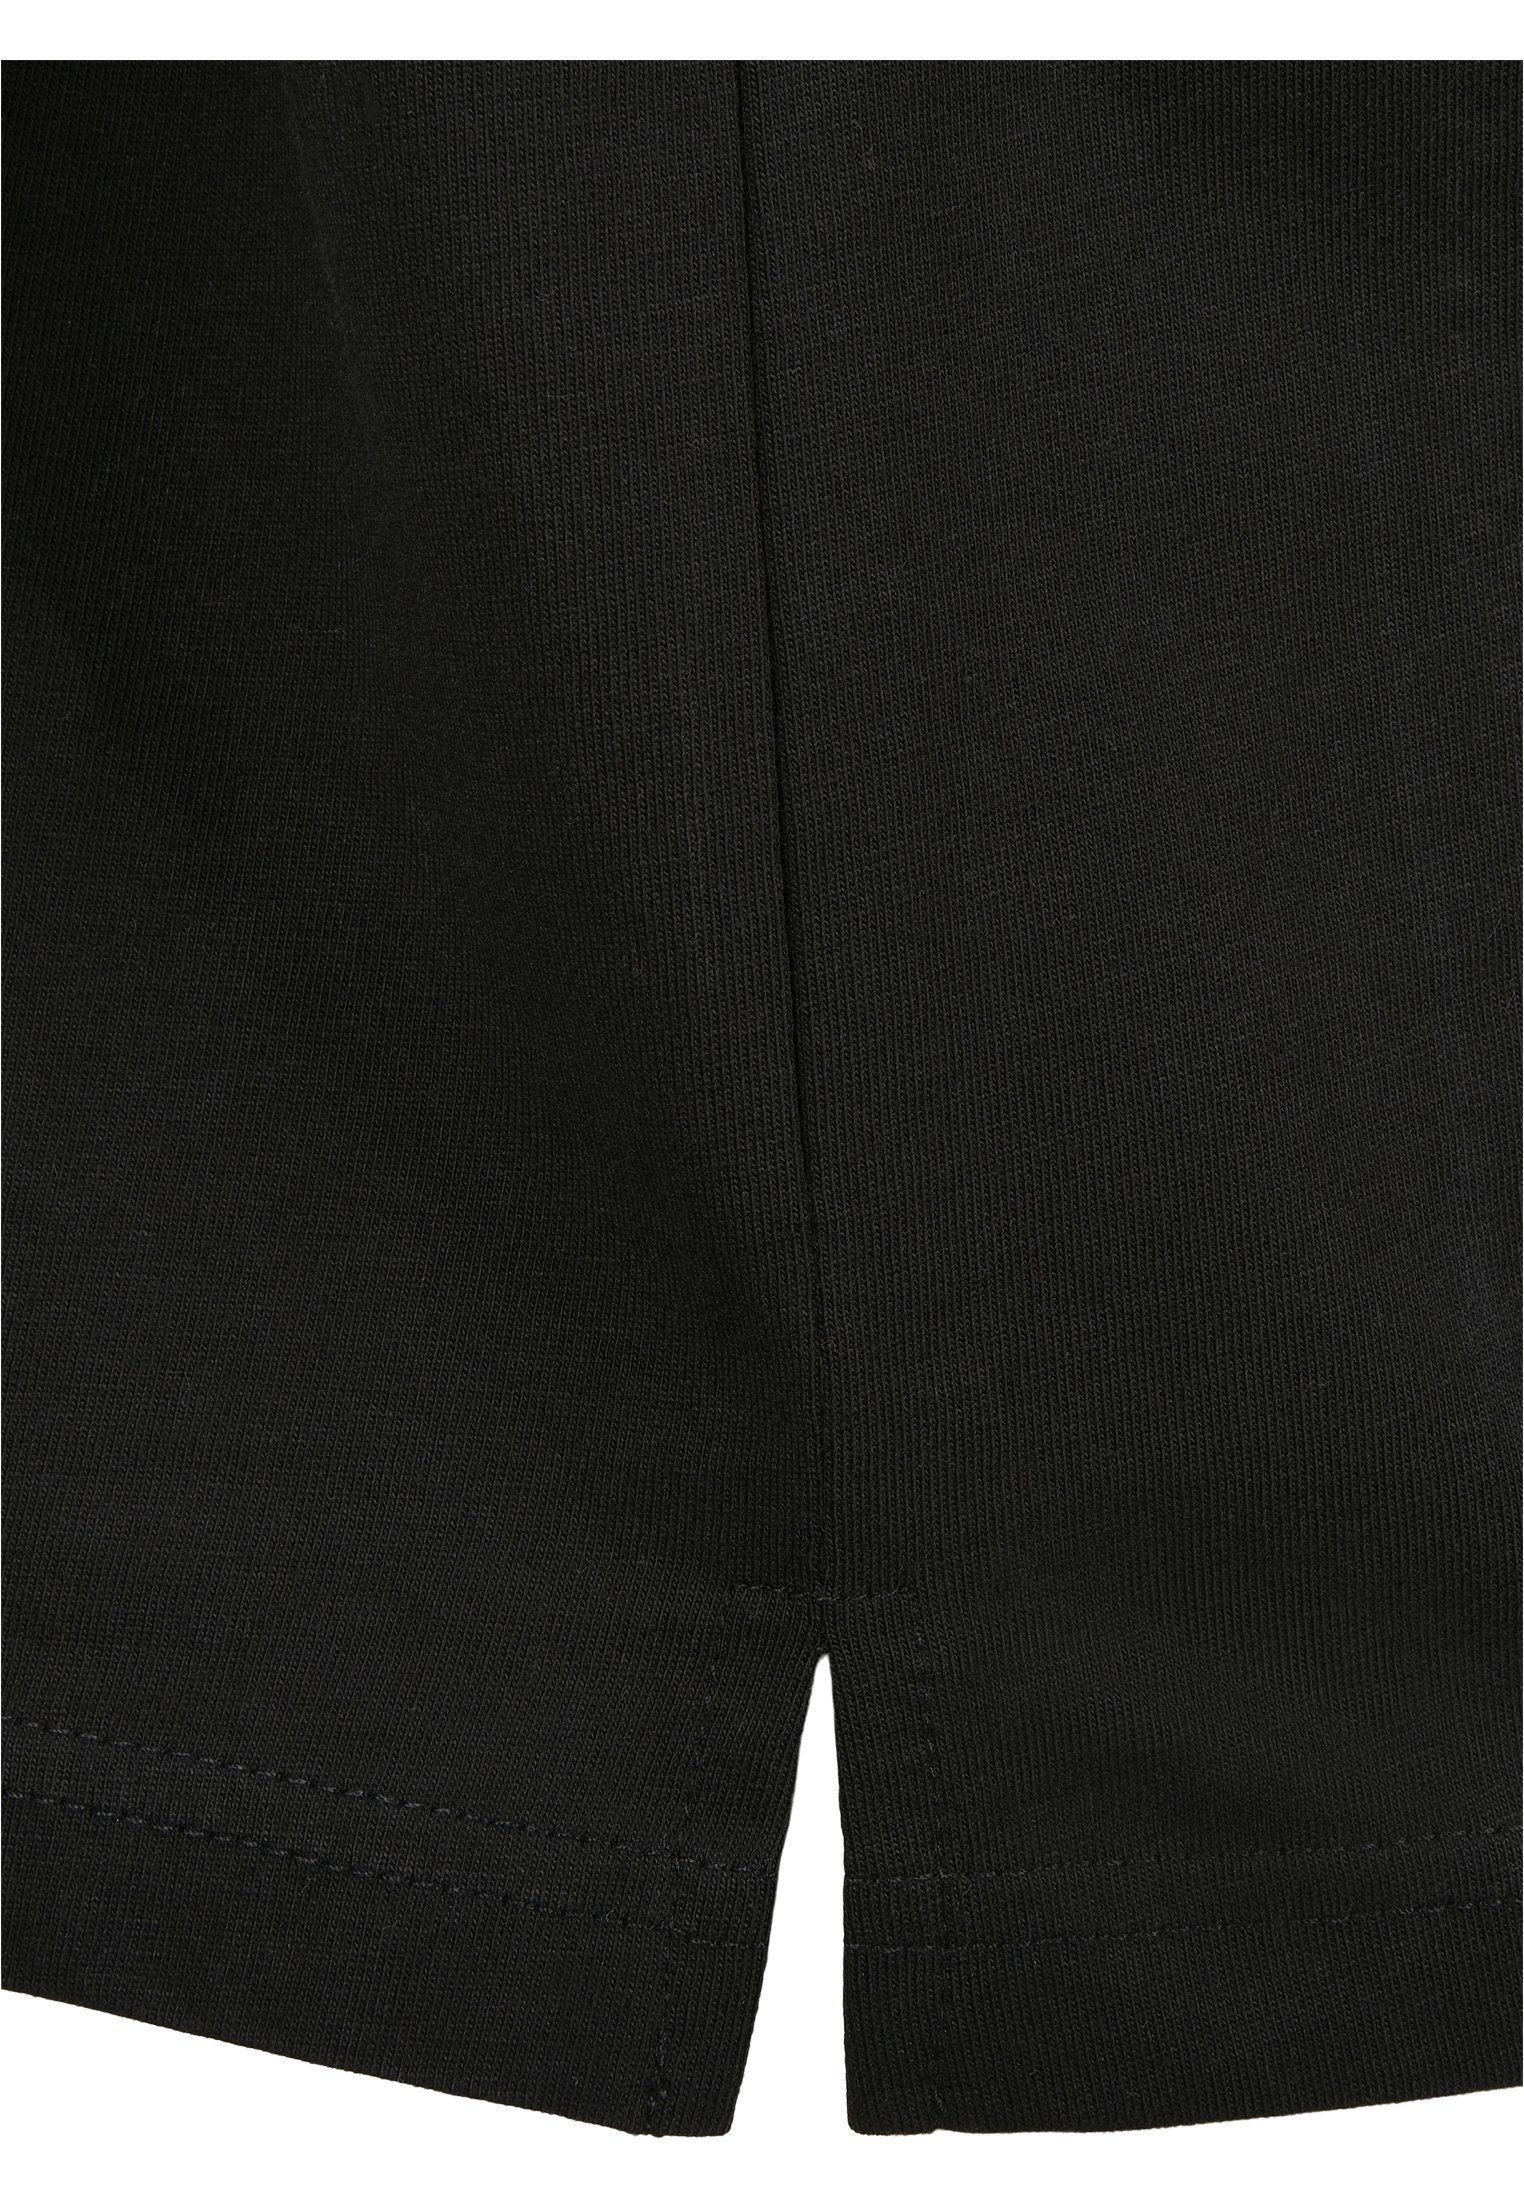 URBAN Oversized Neck Herren Tee (1-tlg) Mock CLASSICS black T-Shirt